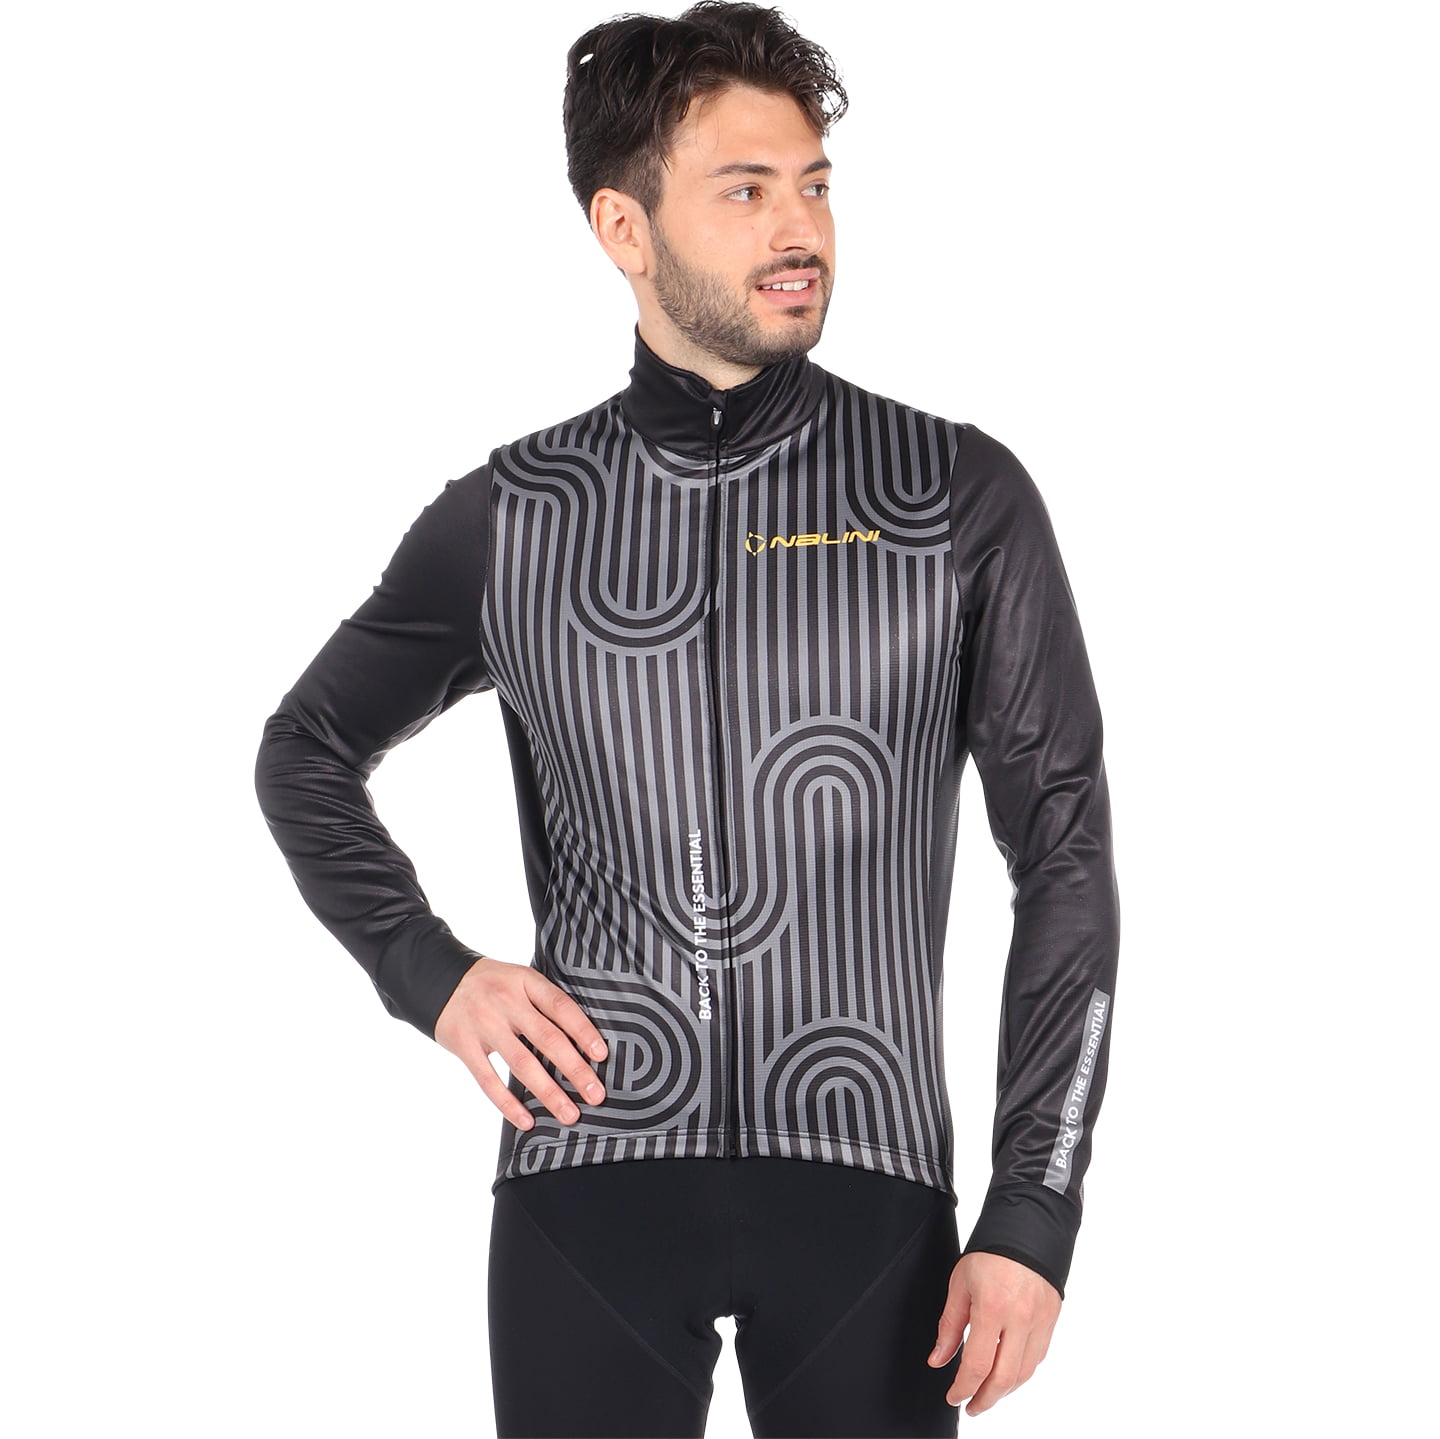 NALINI New Strada Winter Jacket Thermal Jacket, for men, size M, Cycle jacket, Cycling clothing